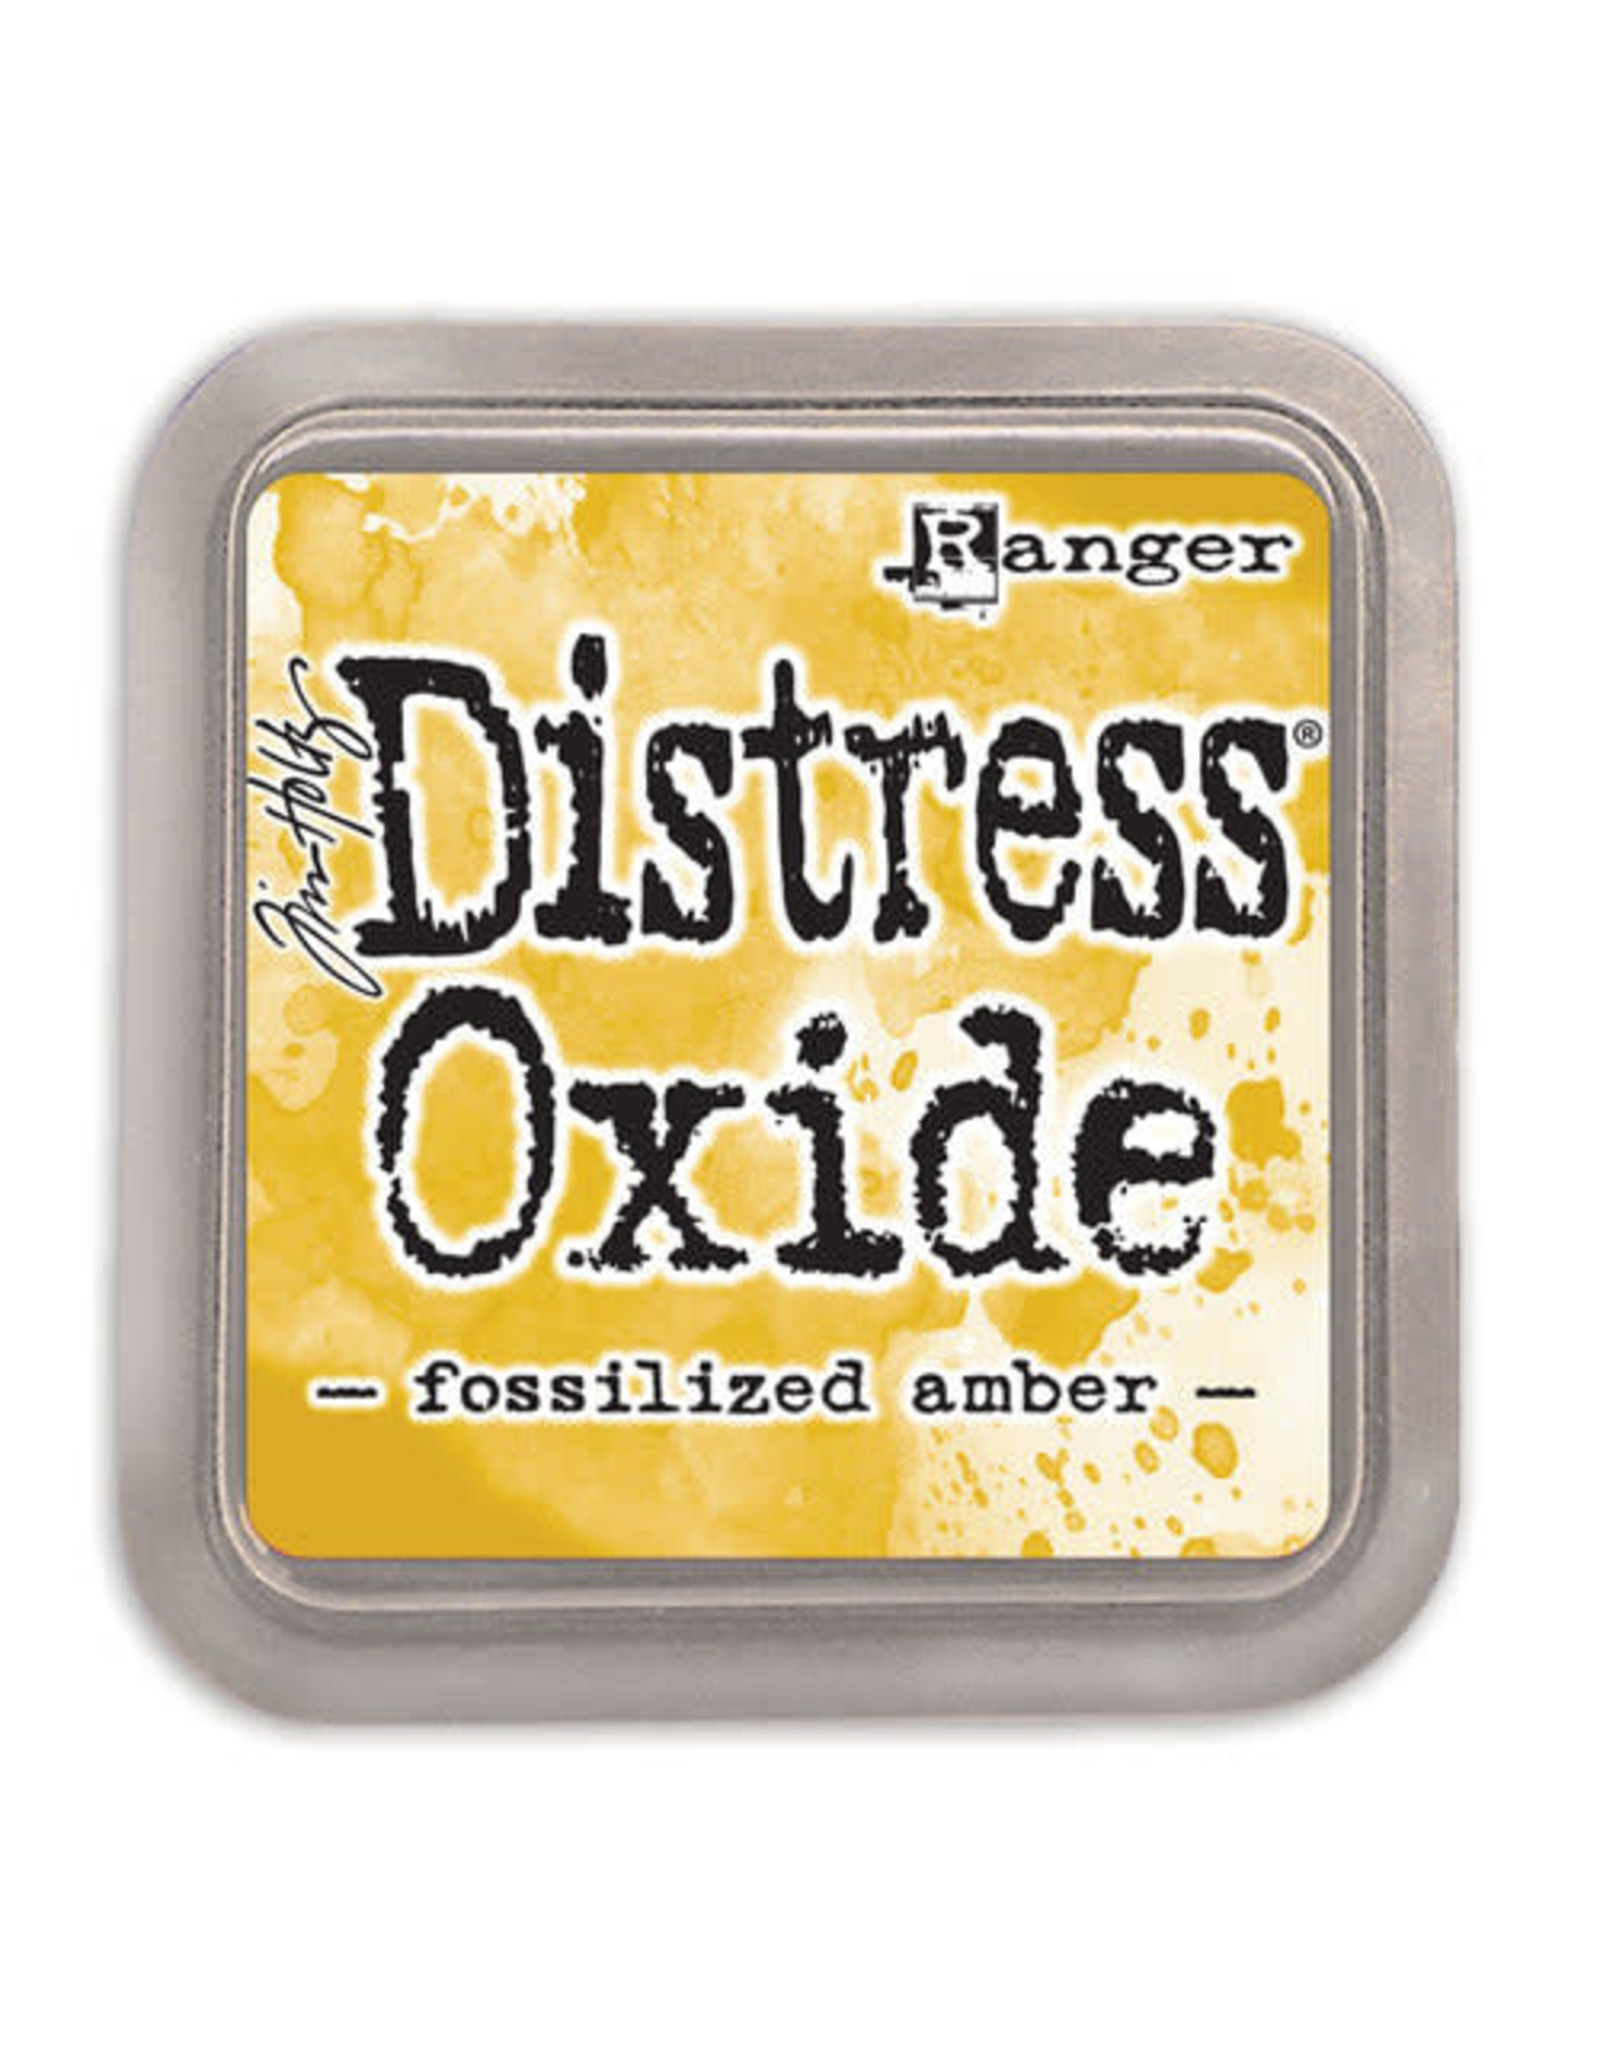 Tim Holtz - Ranger Distress Oxide Fossilized Amber